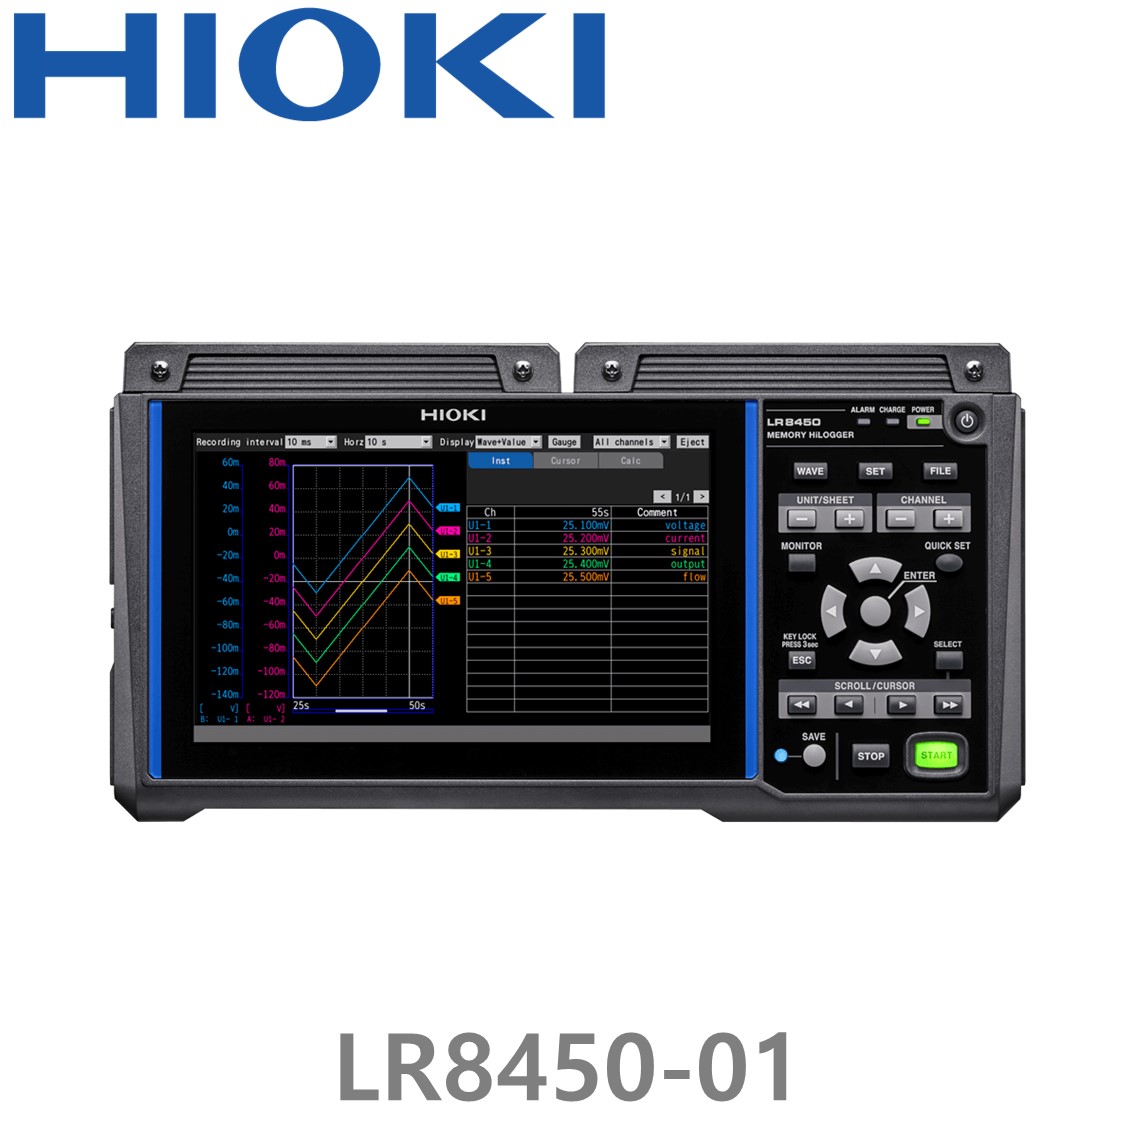 [ HIOKI ] LR8450-01 메모리 하이로거, 최대 120채널 확장 - 무선LAN탑재모델